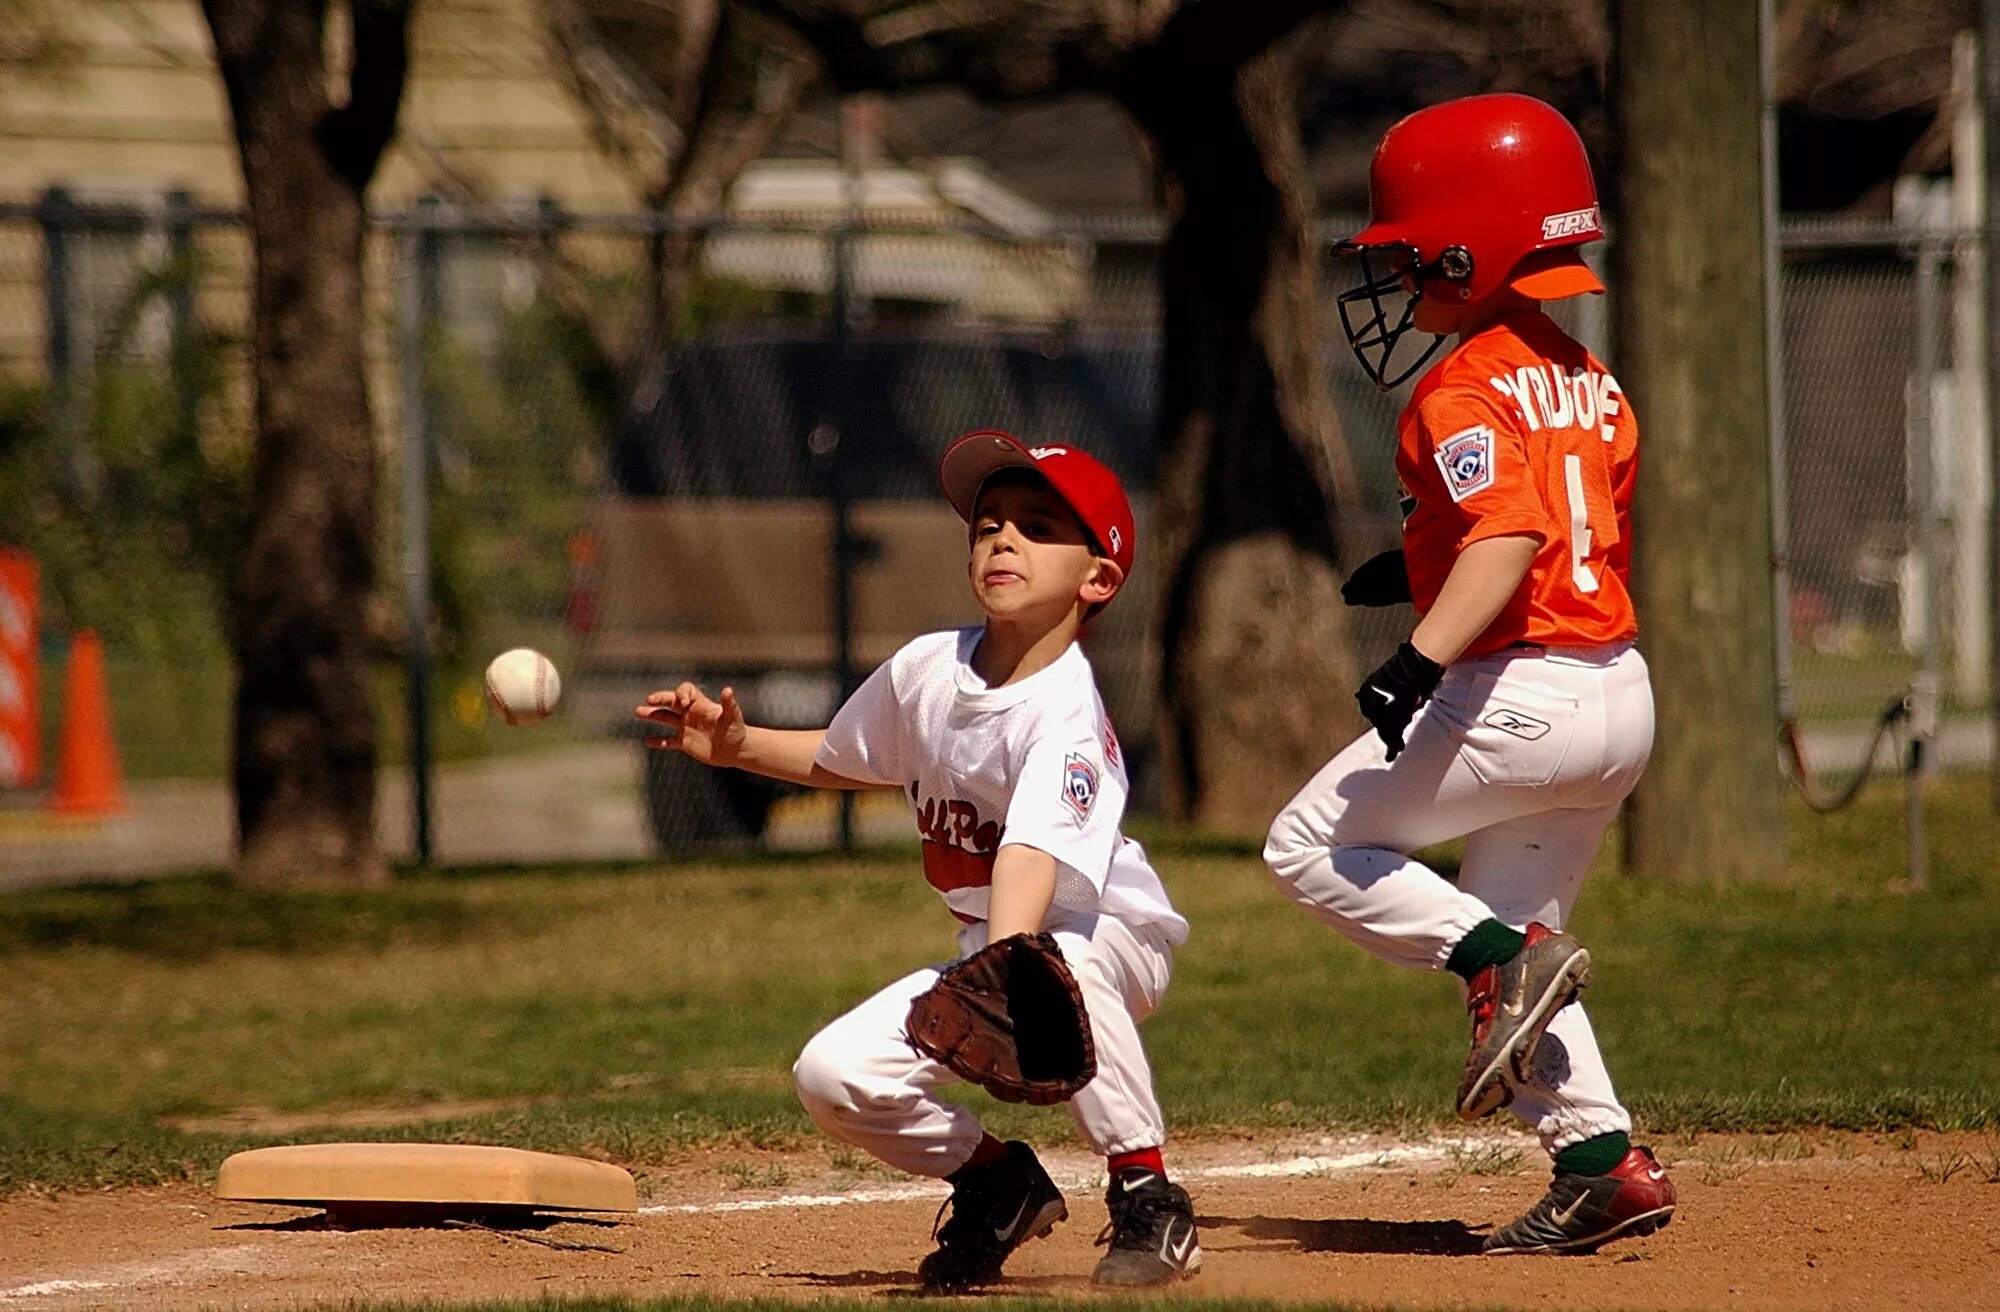 The usa games. Baseball игра. Детский Бейсбол. Бейсбол спорт. Бейсбол в Америке.